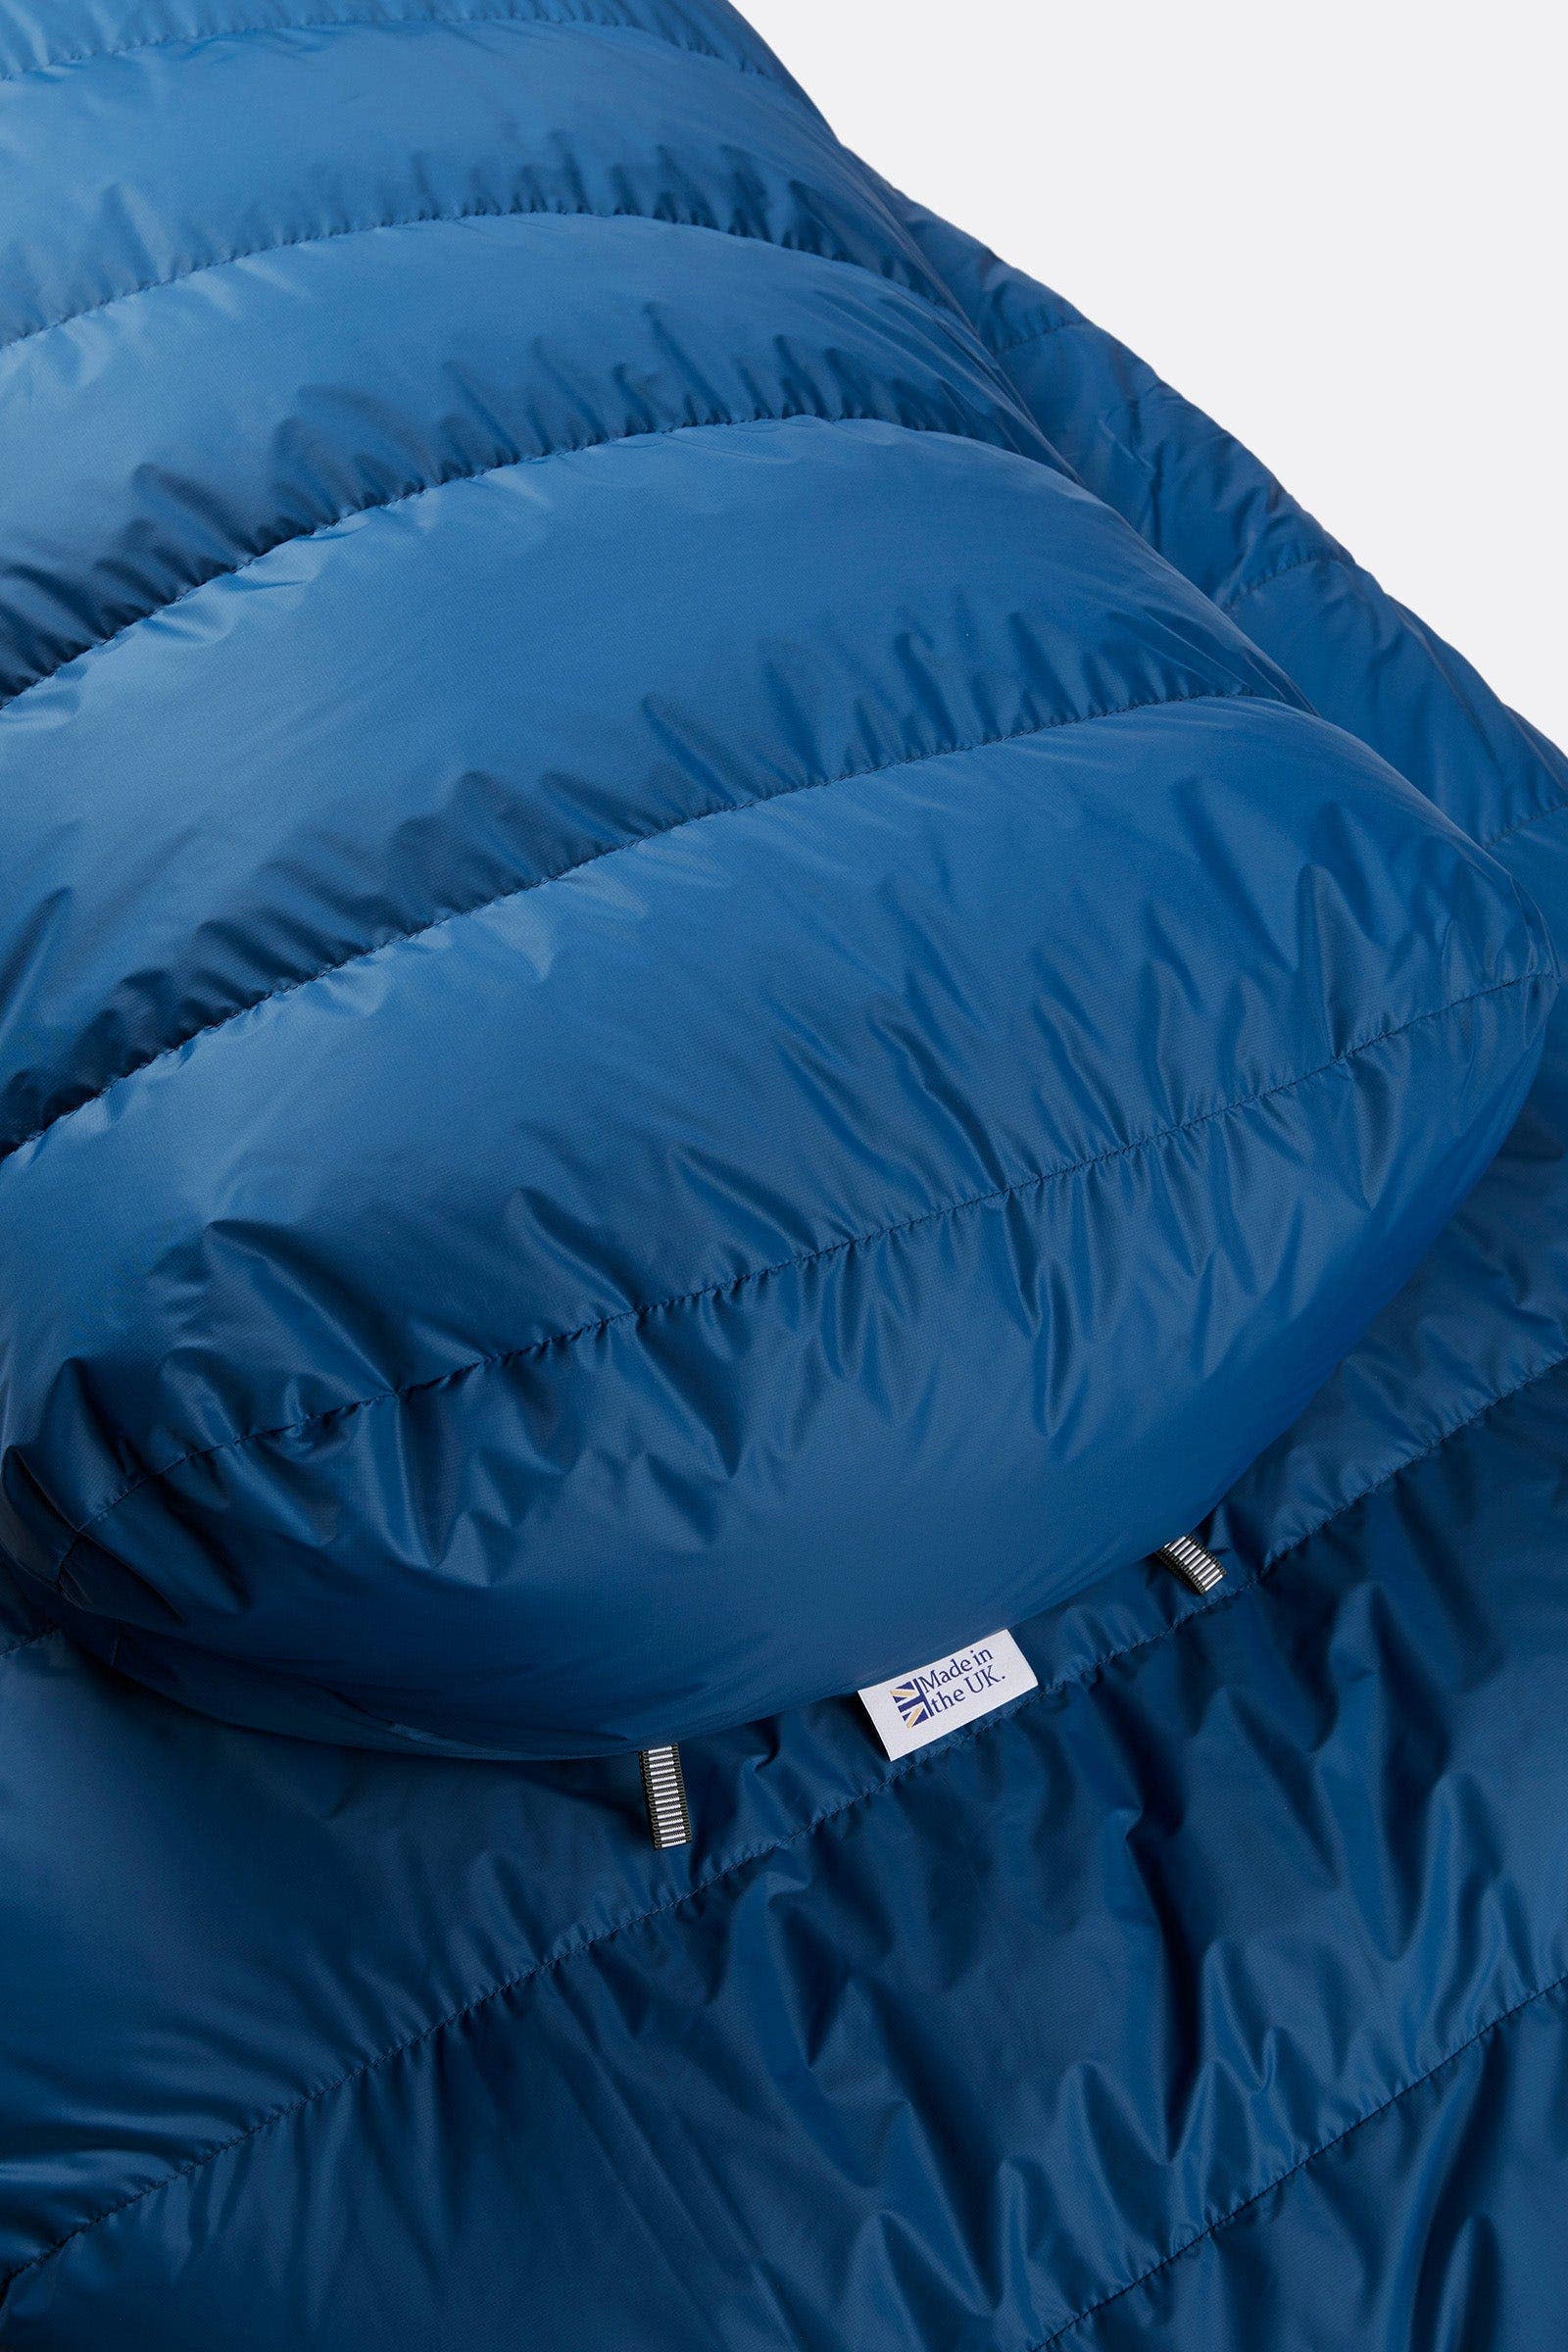 Ascent Pro 600 Down Sleeping Bag (-7C) 